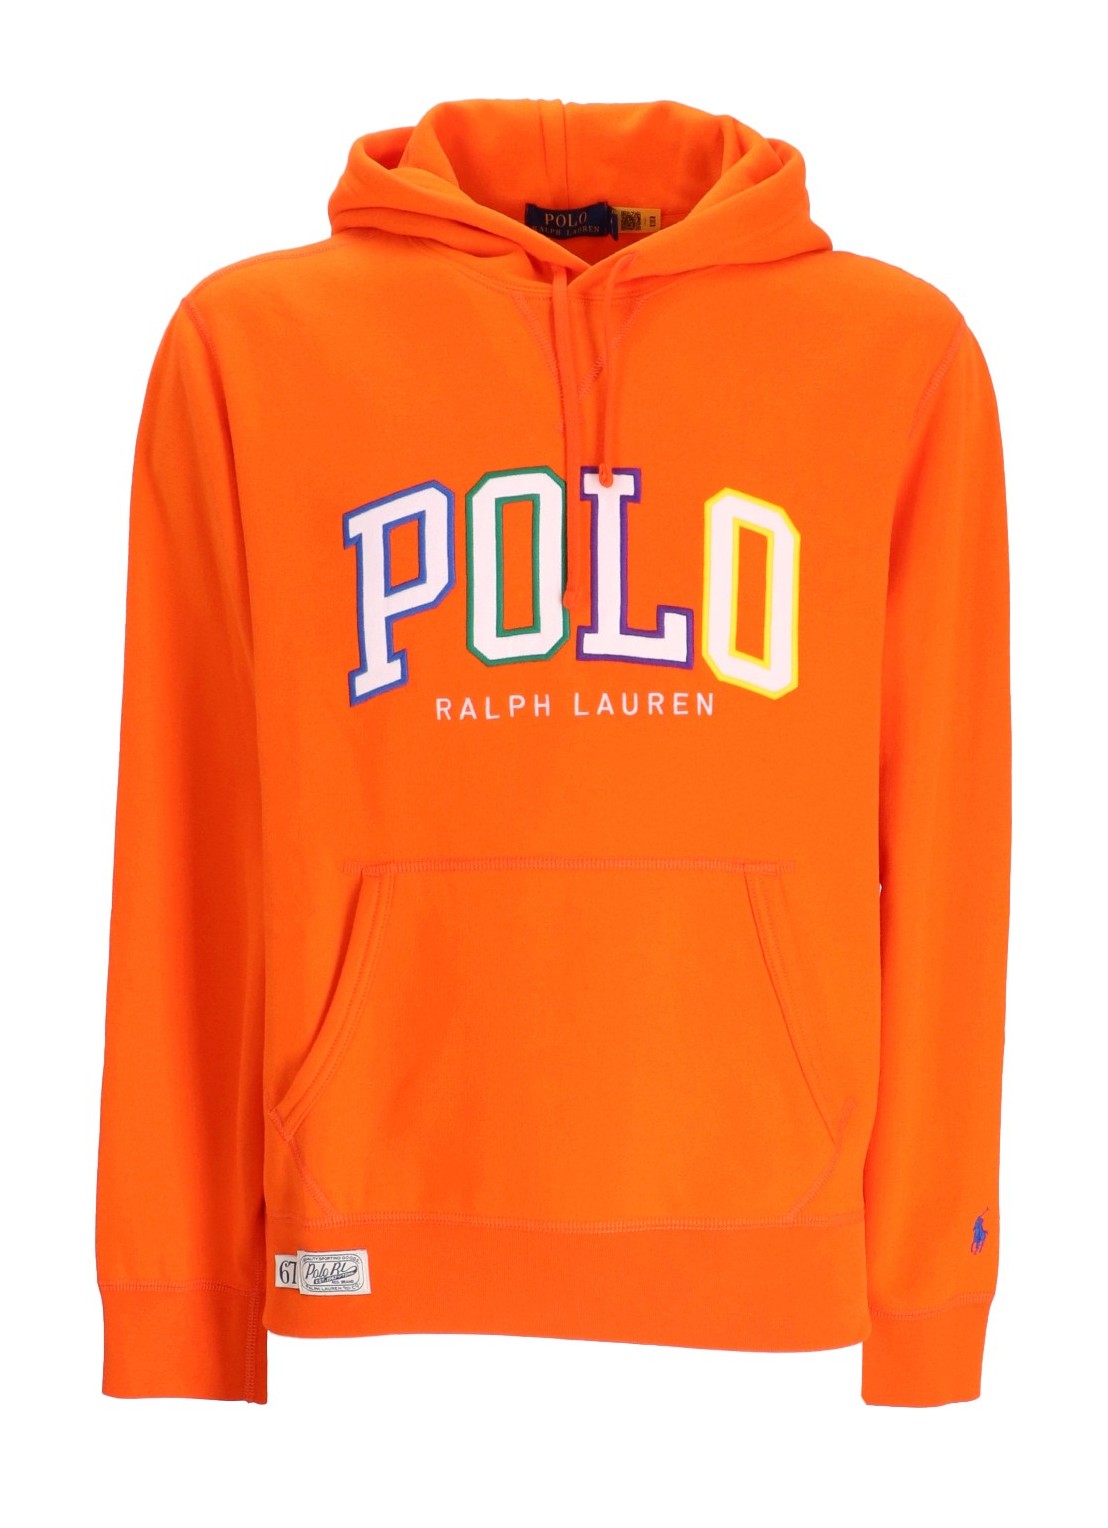 Sudadera polo ralph lauren sweater man lspohoodm5-long sleeve-sweatshirt 710890190002 sailing orange